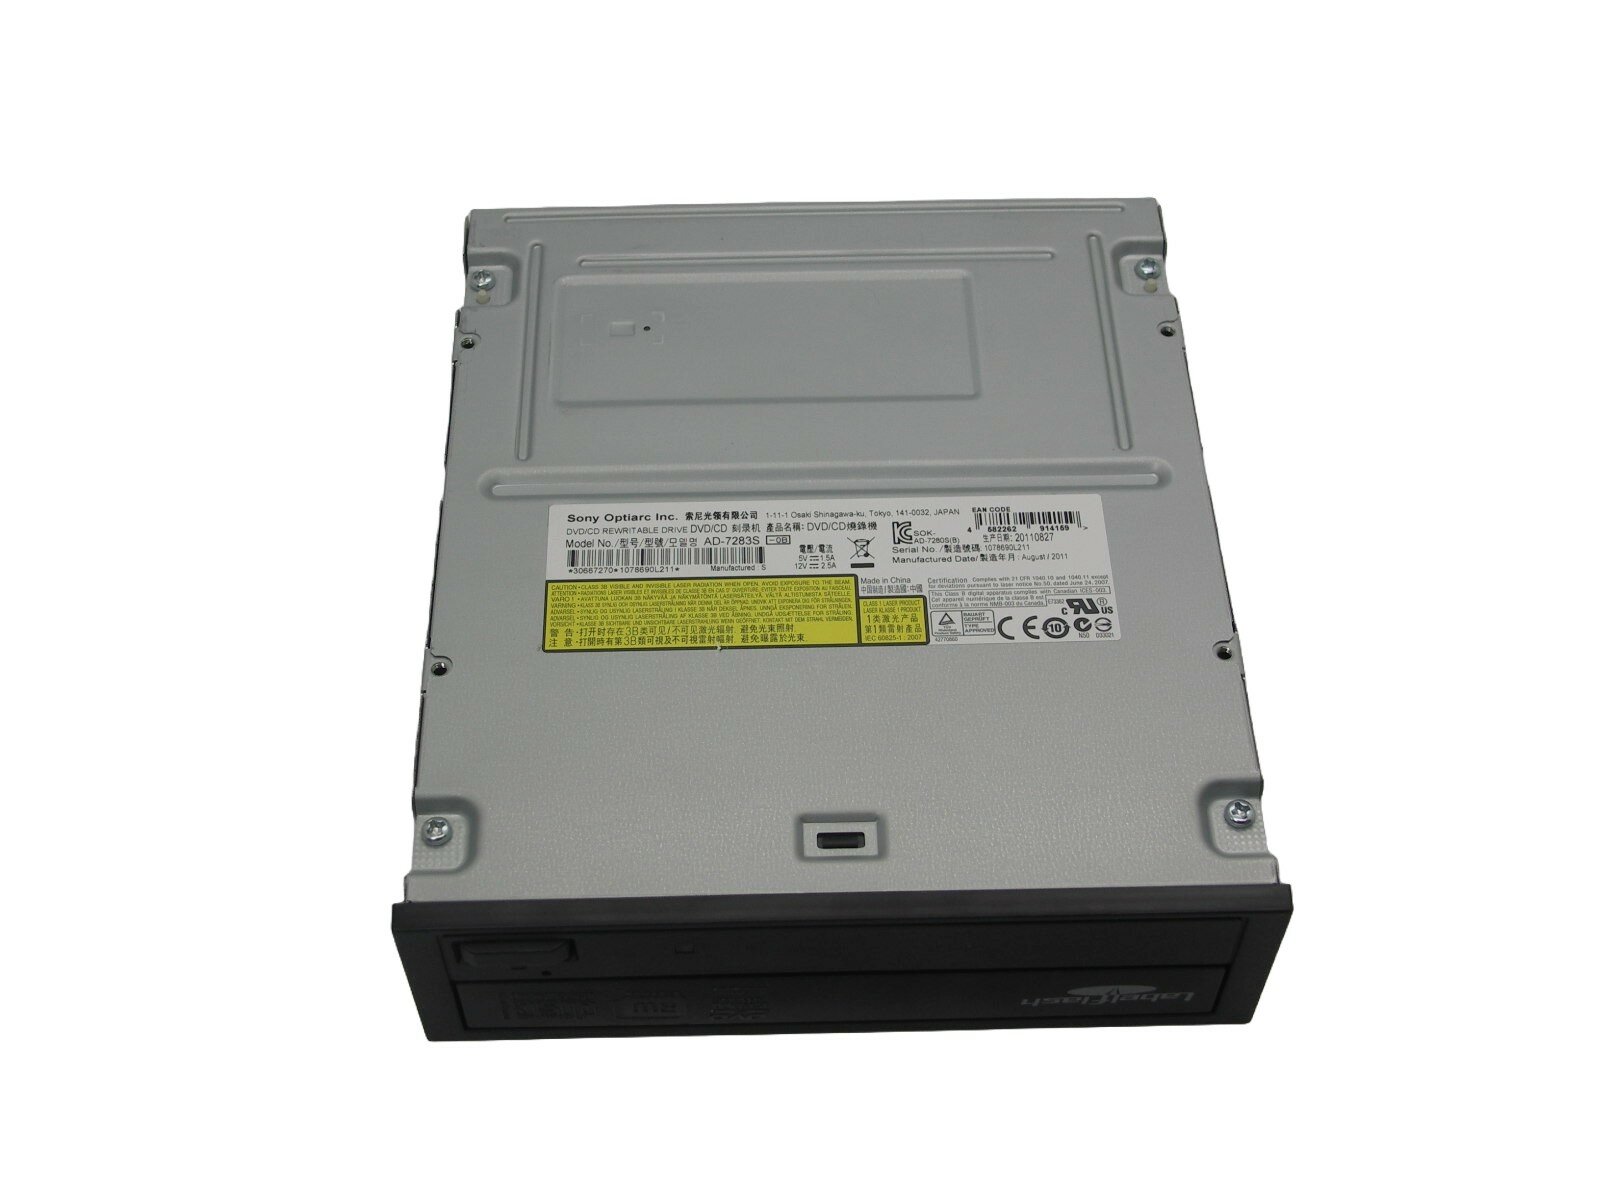 Оптический привод DVD +R/RW CD-R/RW Sony Optiarc Inc. AD-7283S (SATA) чёрный